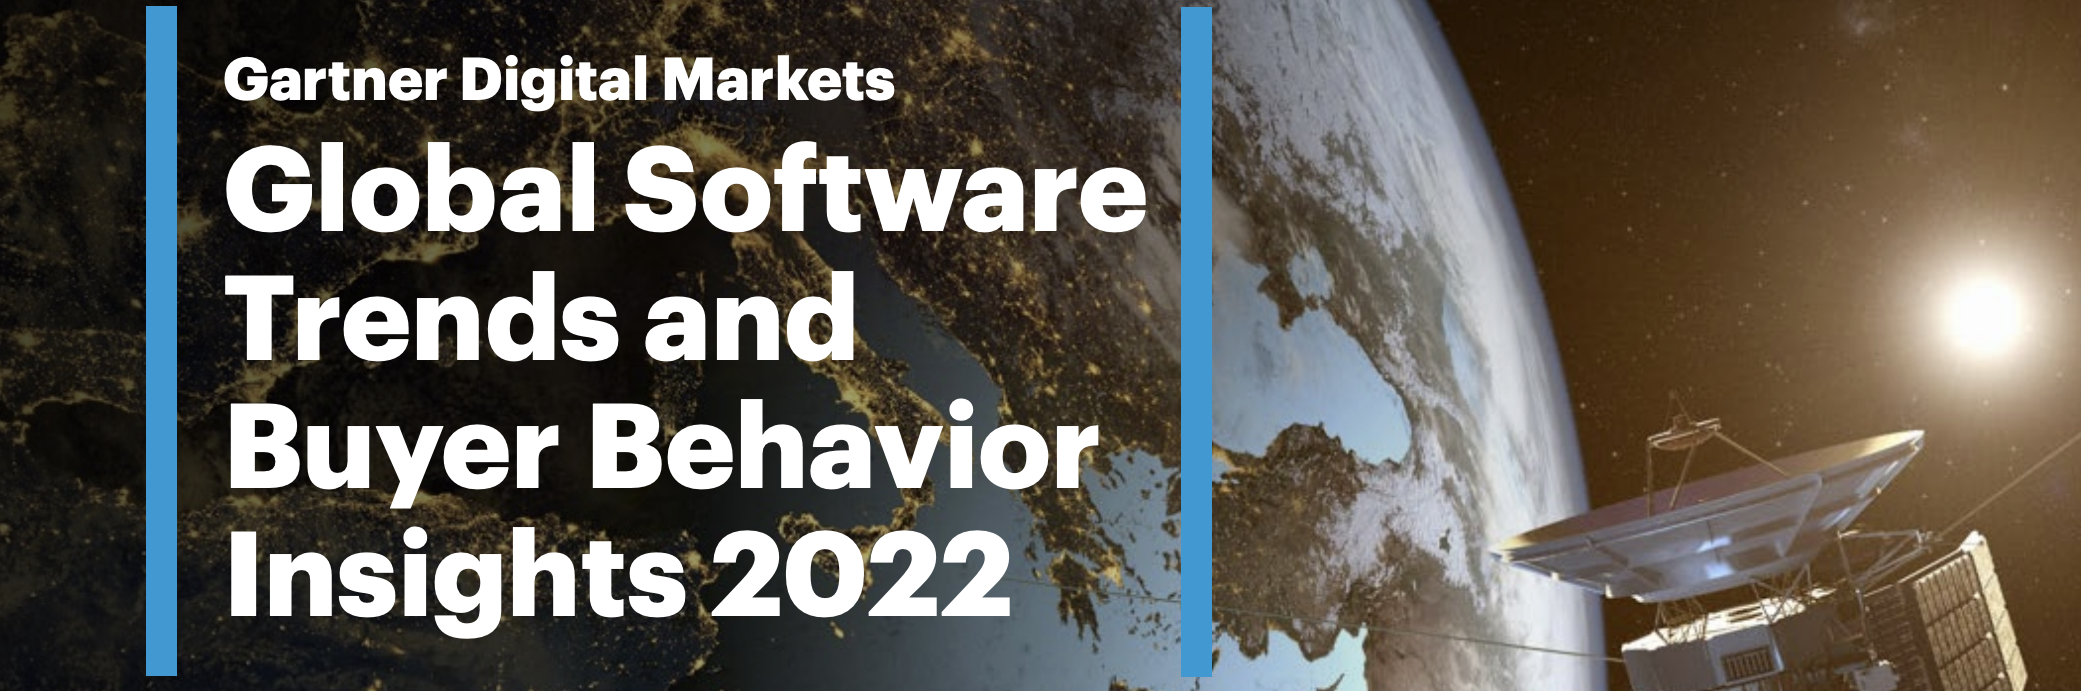 HR software and Gartner's 2022 Global Software Buyer Trends Survey.